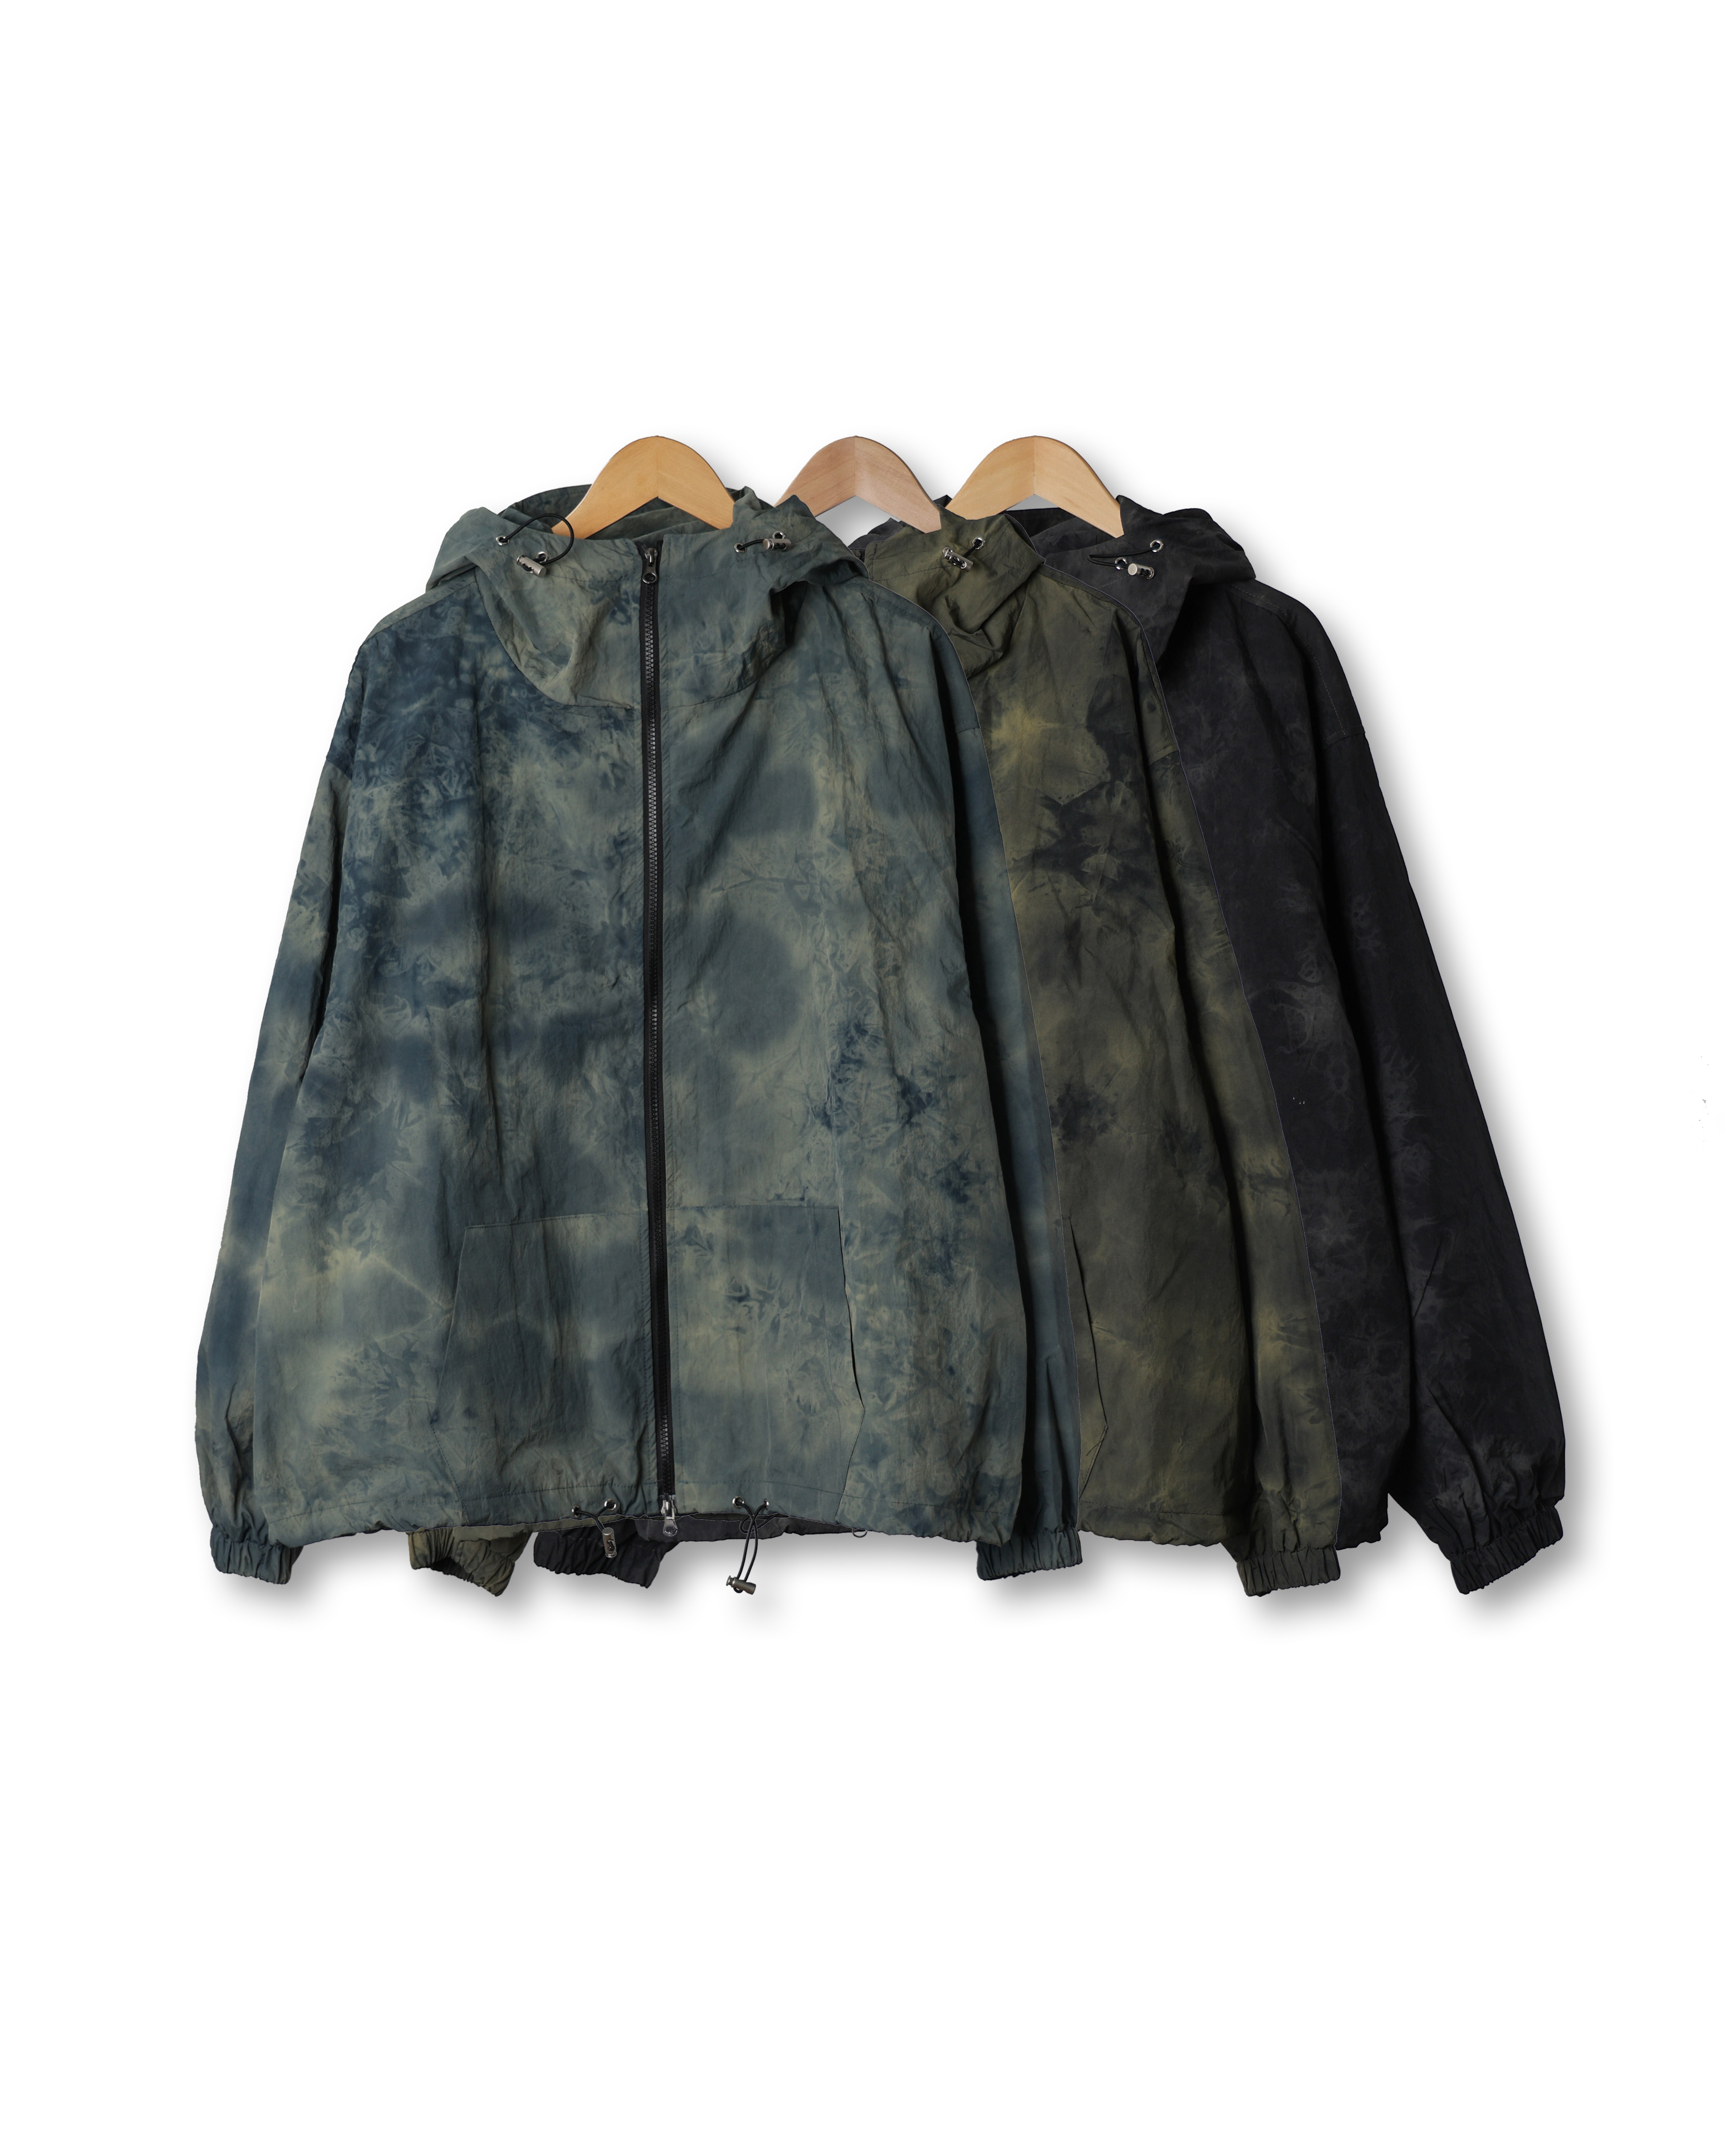 ROAN Tye-Dye Over Loose Wind Jacket (Black/Navy/Olive)